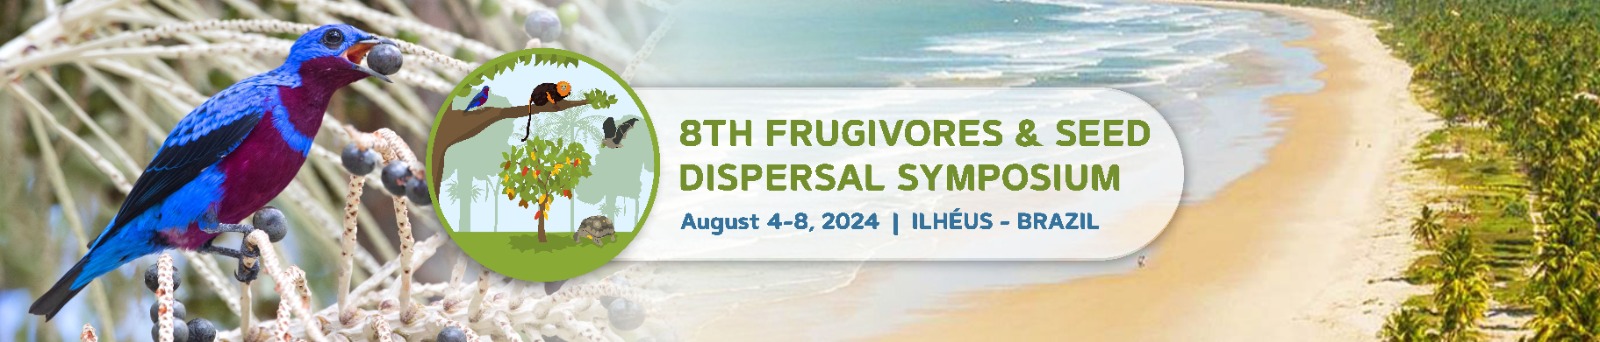 Frugivores & Seed Dispersal Symposium